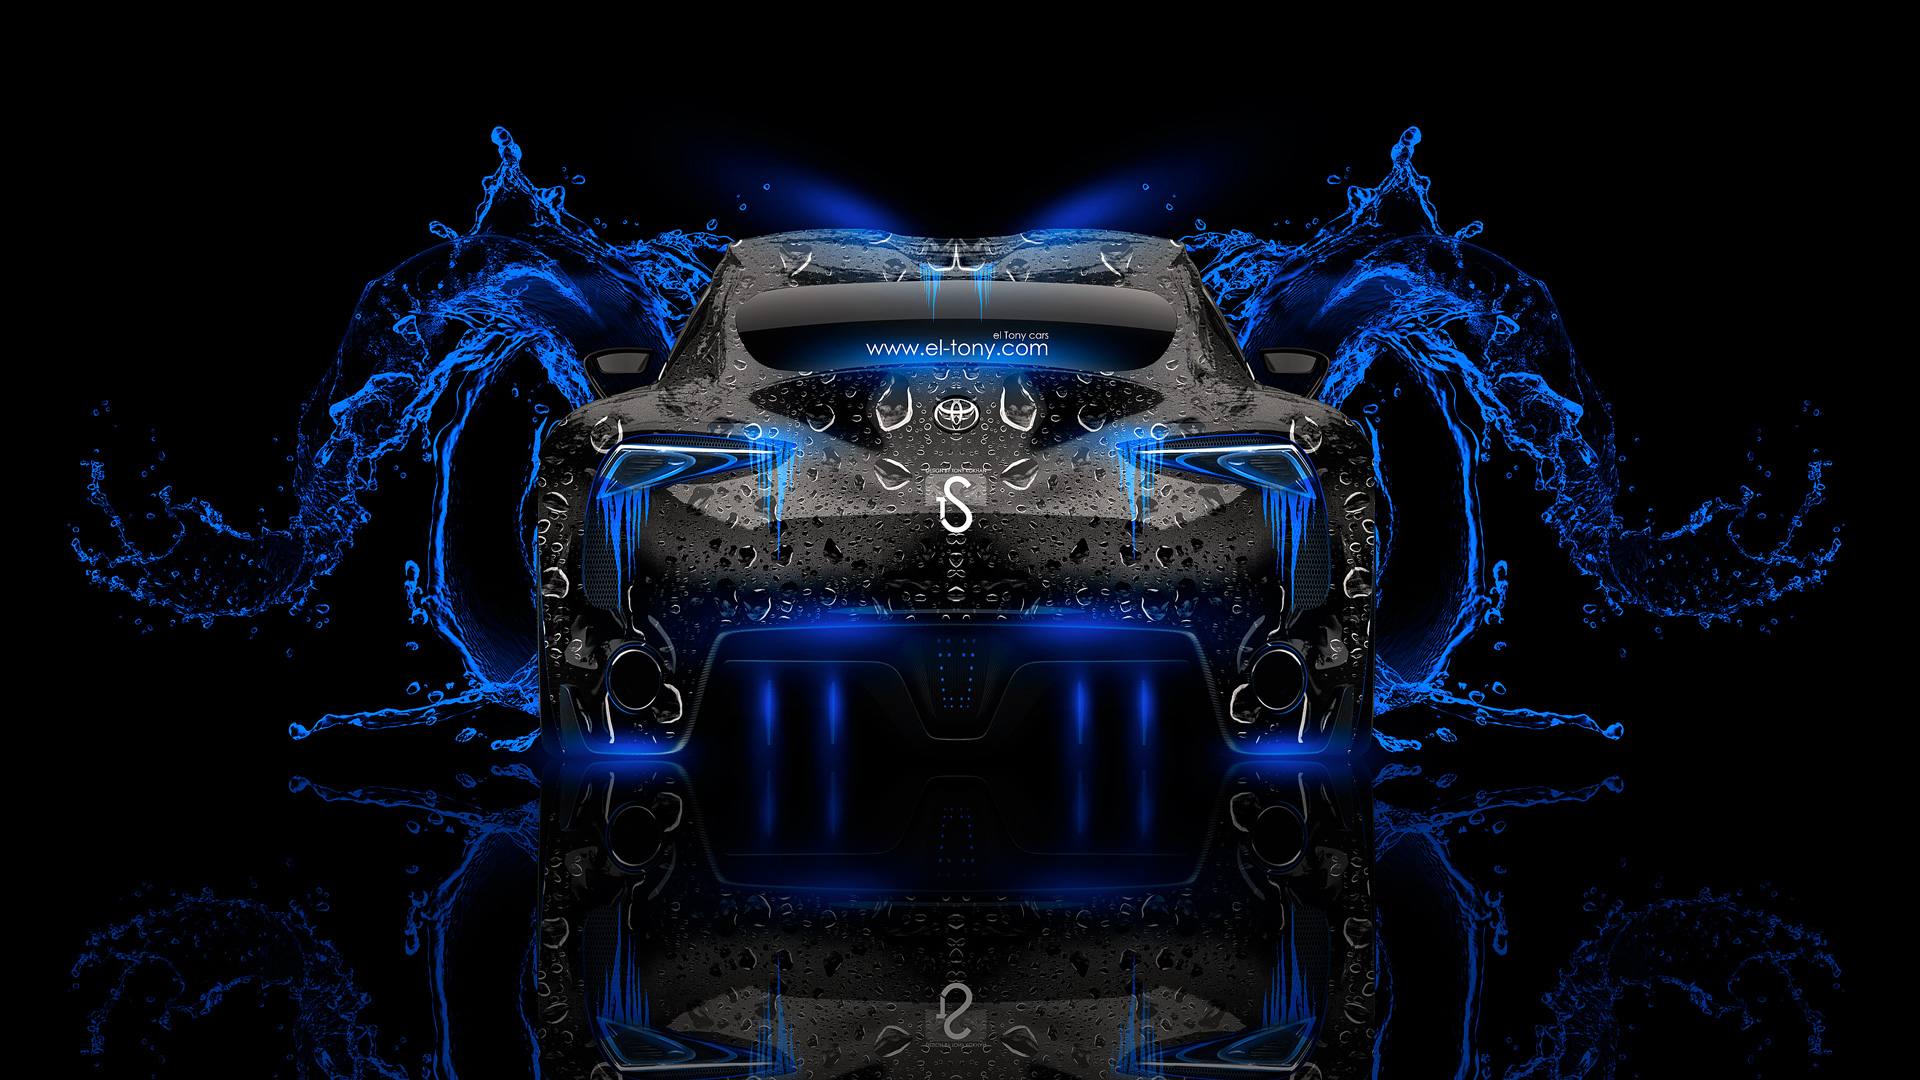 Toyota-FT-1-Back-Blue-Neon-Water-Abstract-Car-2014-design-by-Tony-Kokhan-www.el-tony.com_.jpg